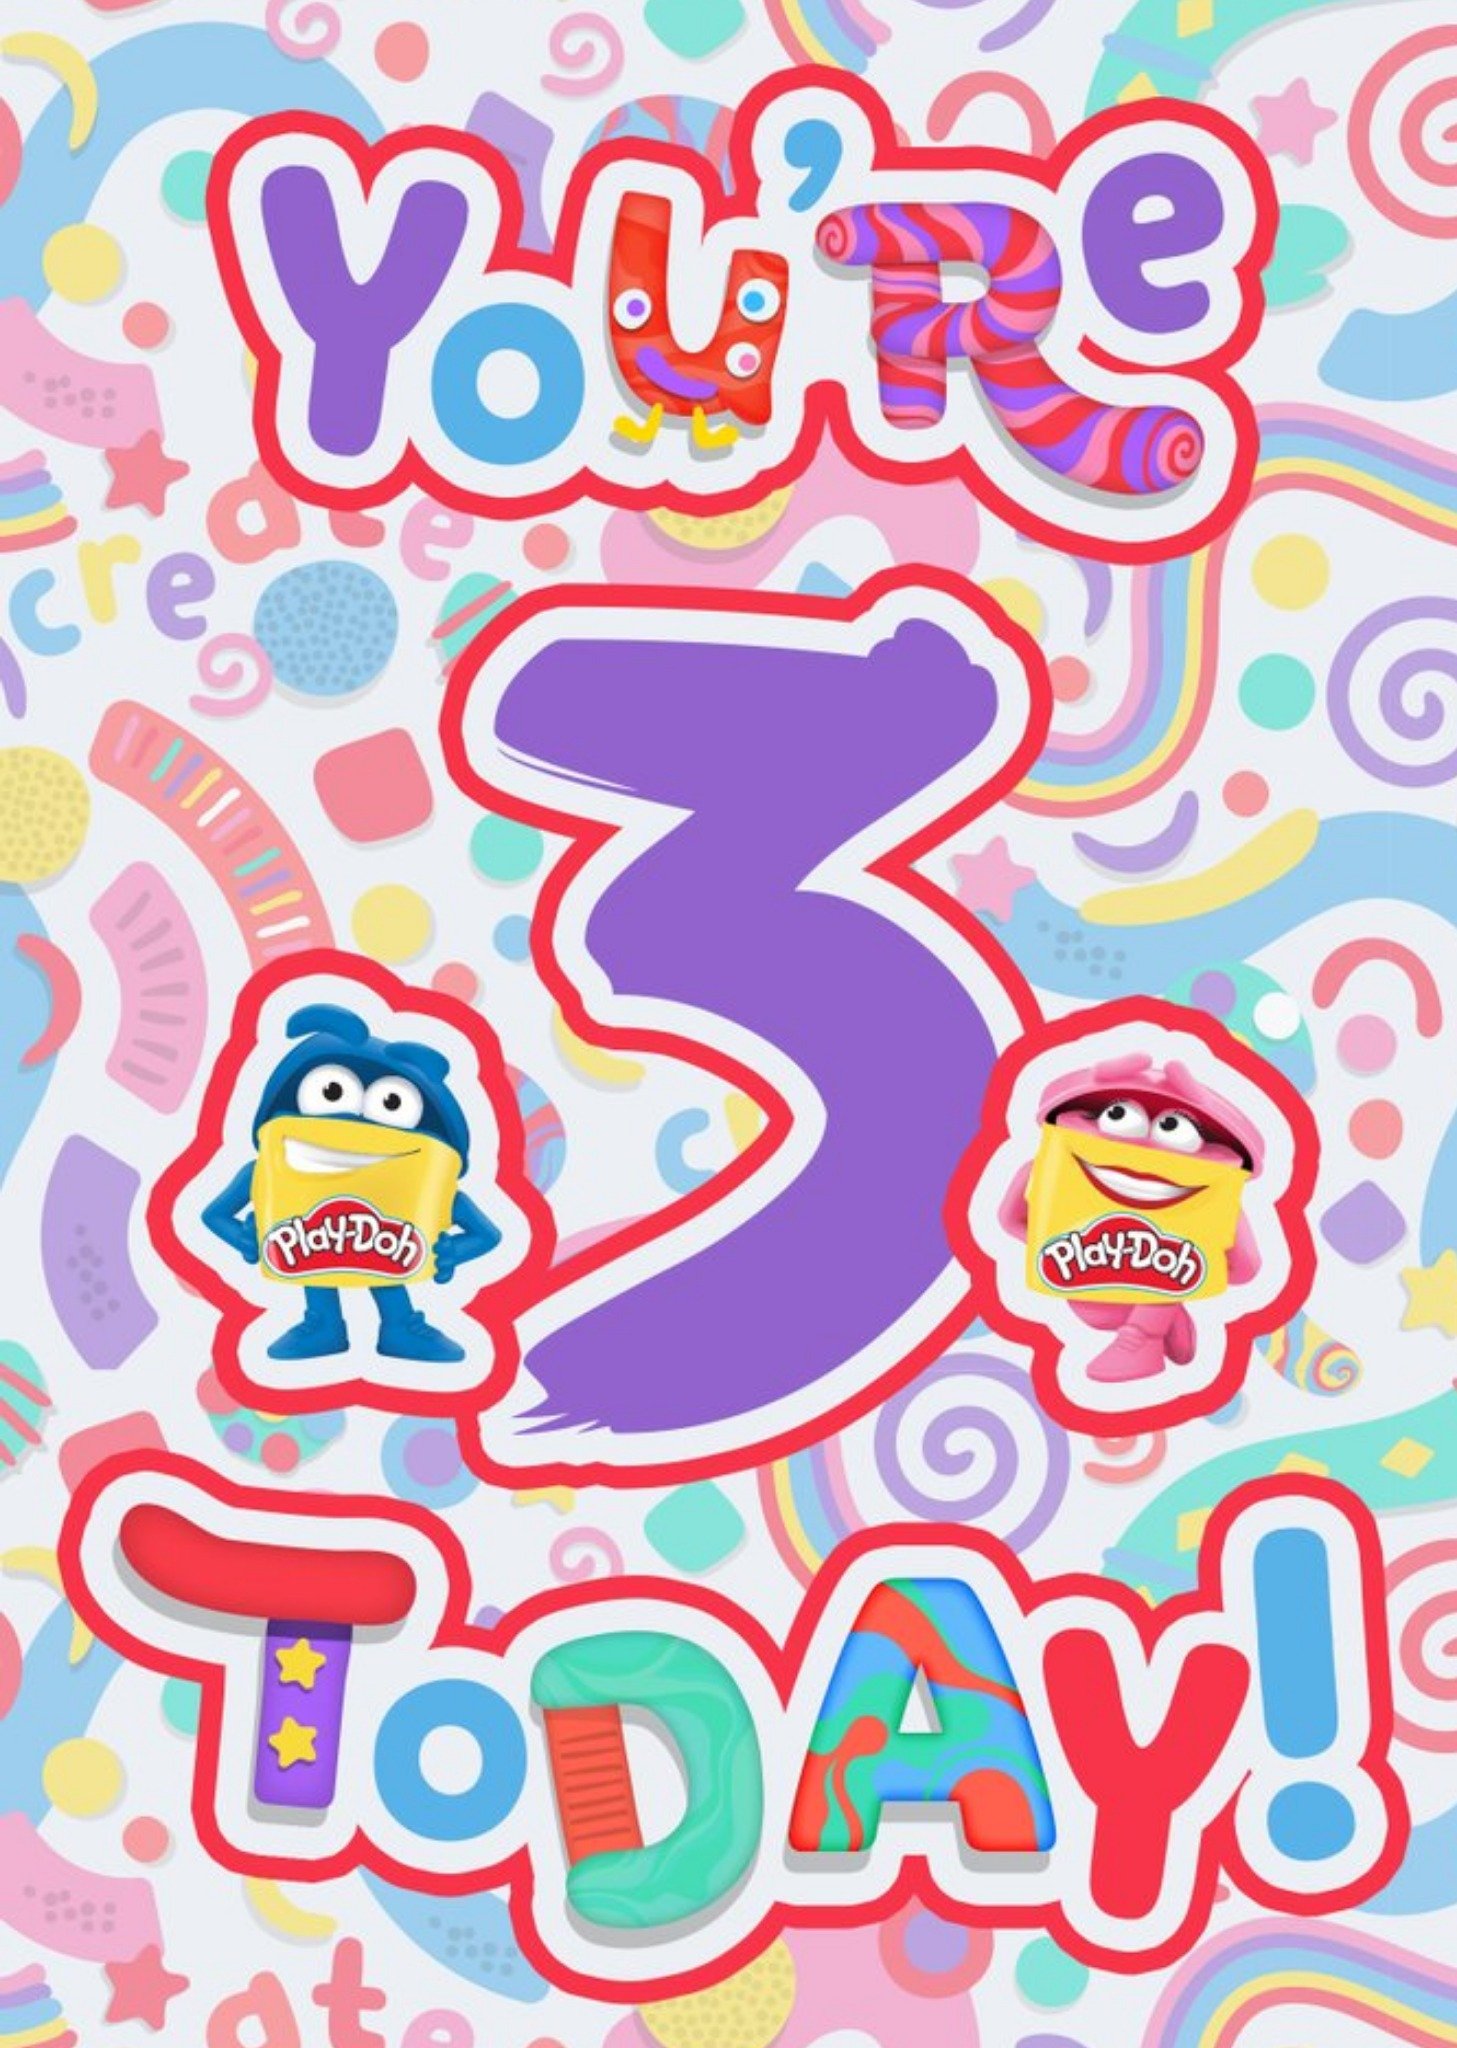 Moonpig Play Doh Bright Fun 3 Today Birthday Card By Hasbro Ecard